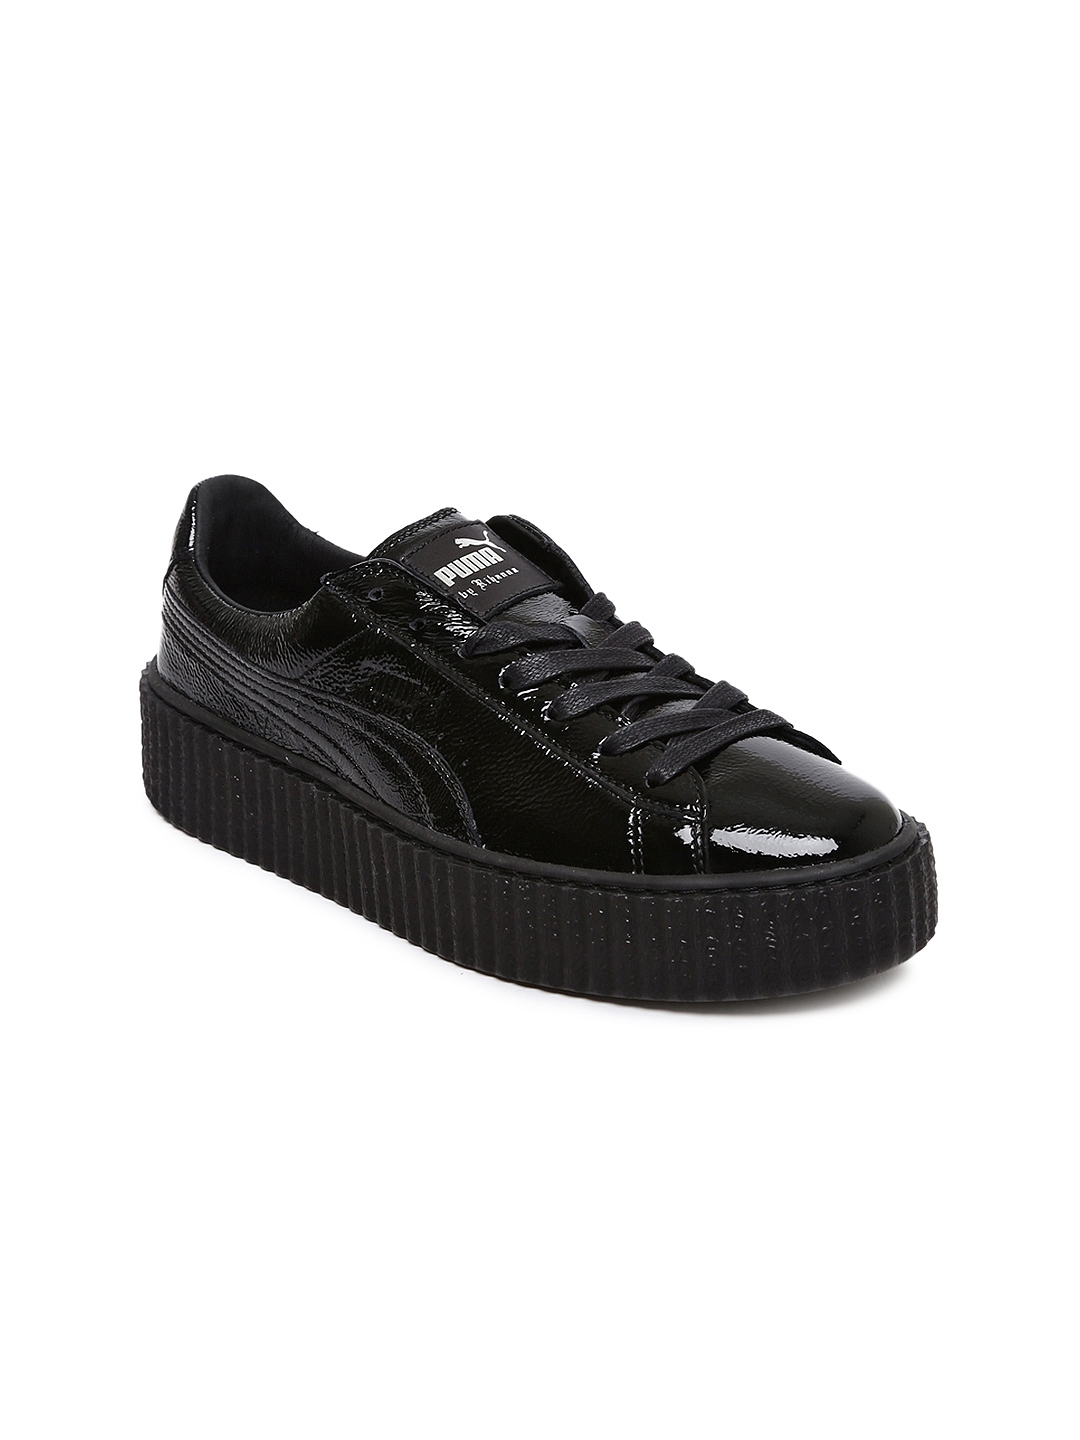 black puma shoes fenty